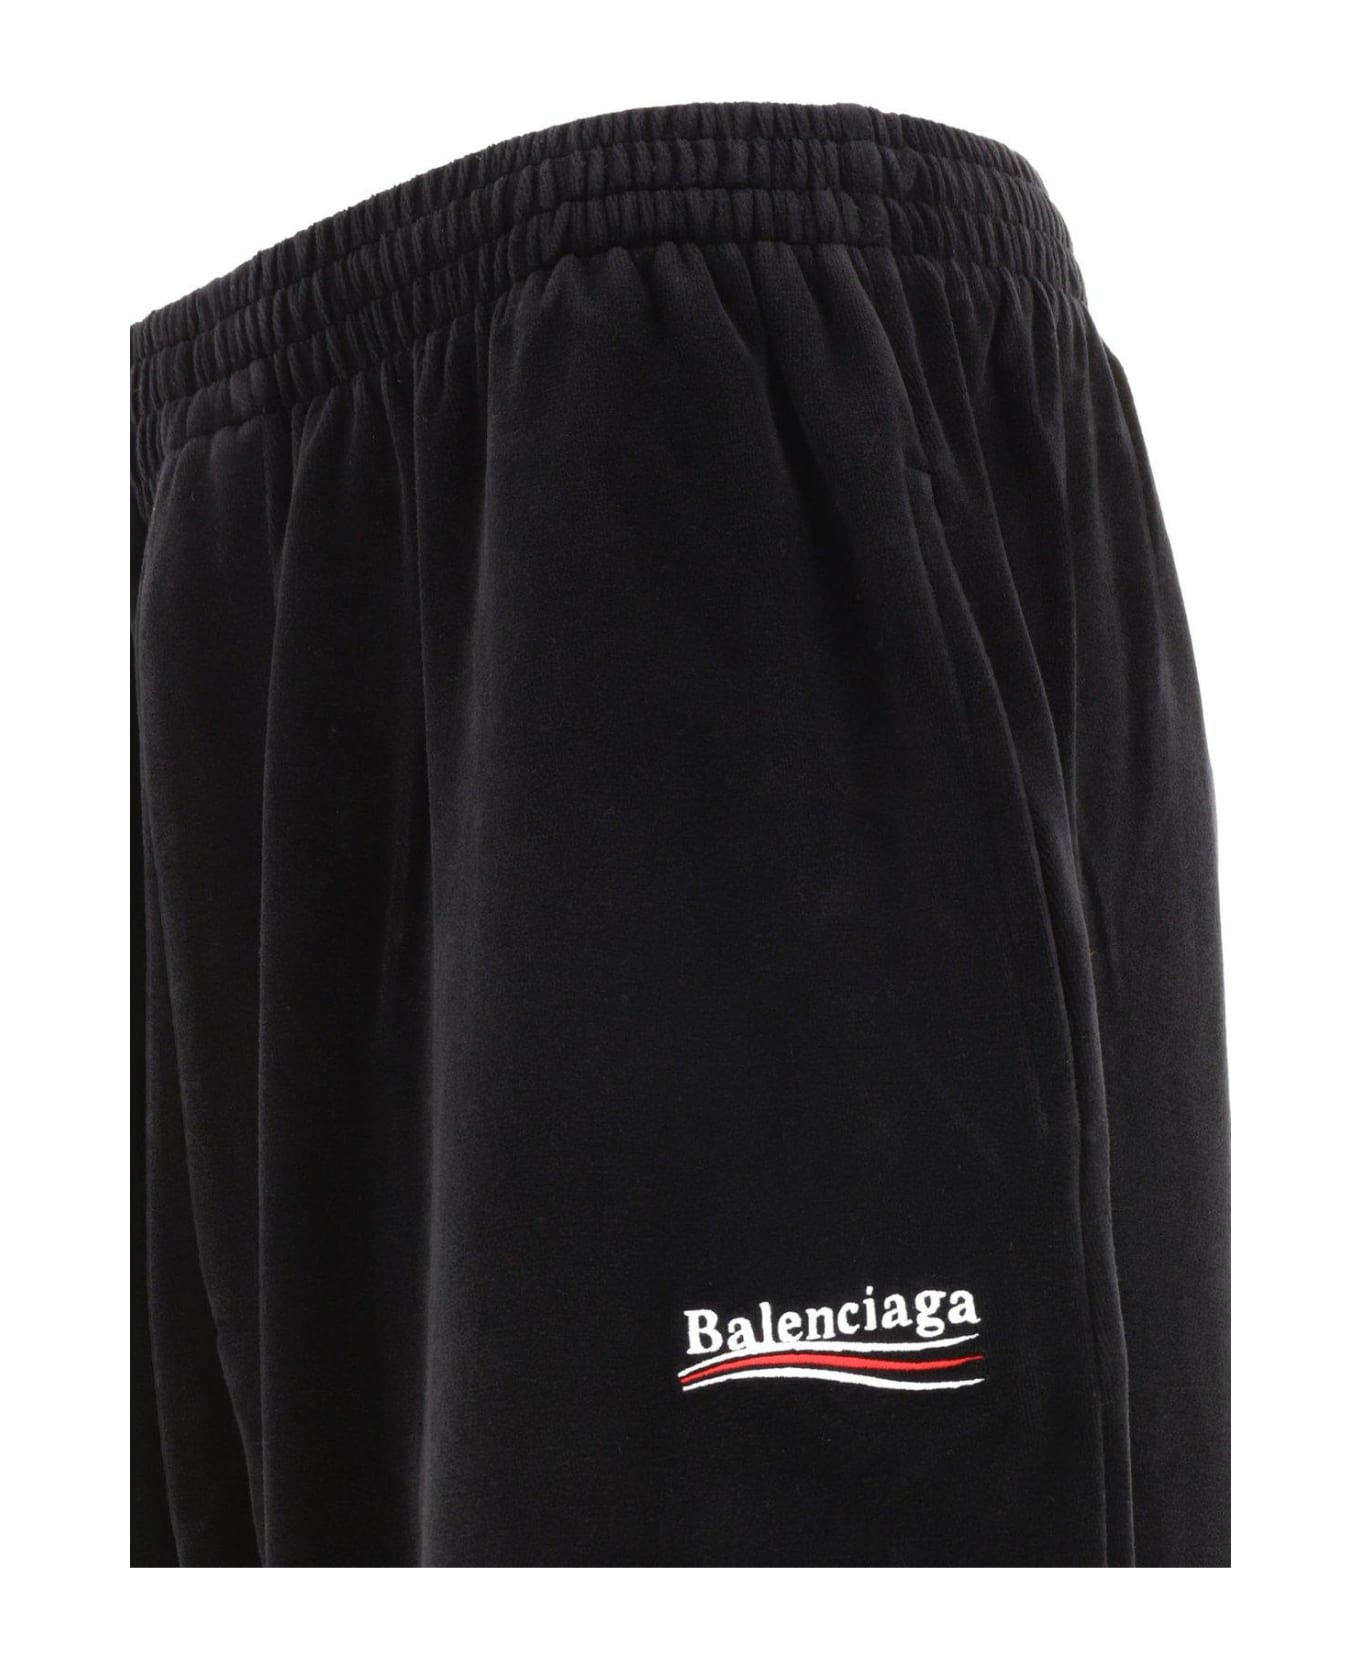 Balenciaga Logo Embroidered Track Pants - Black/white